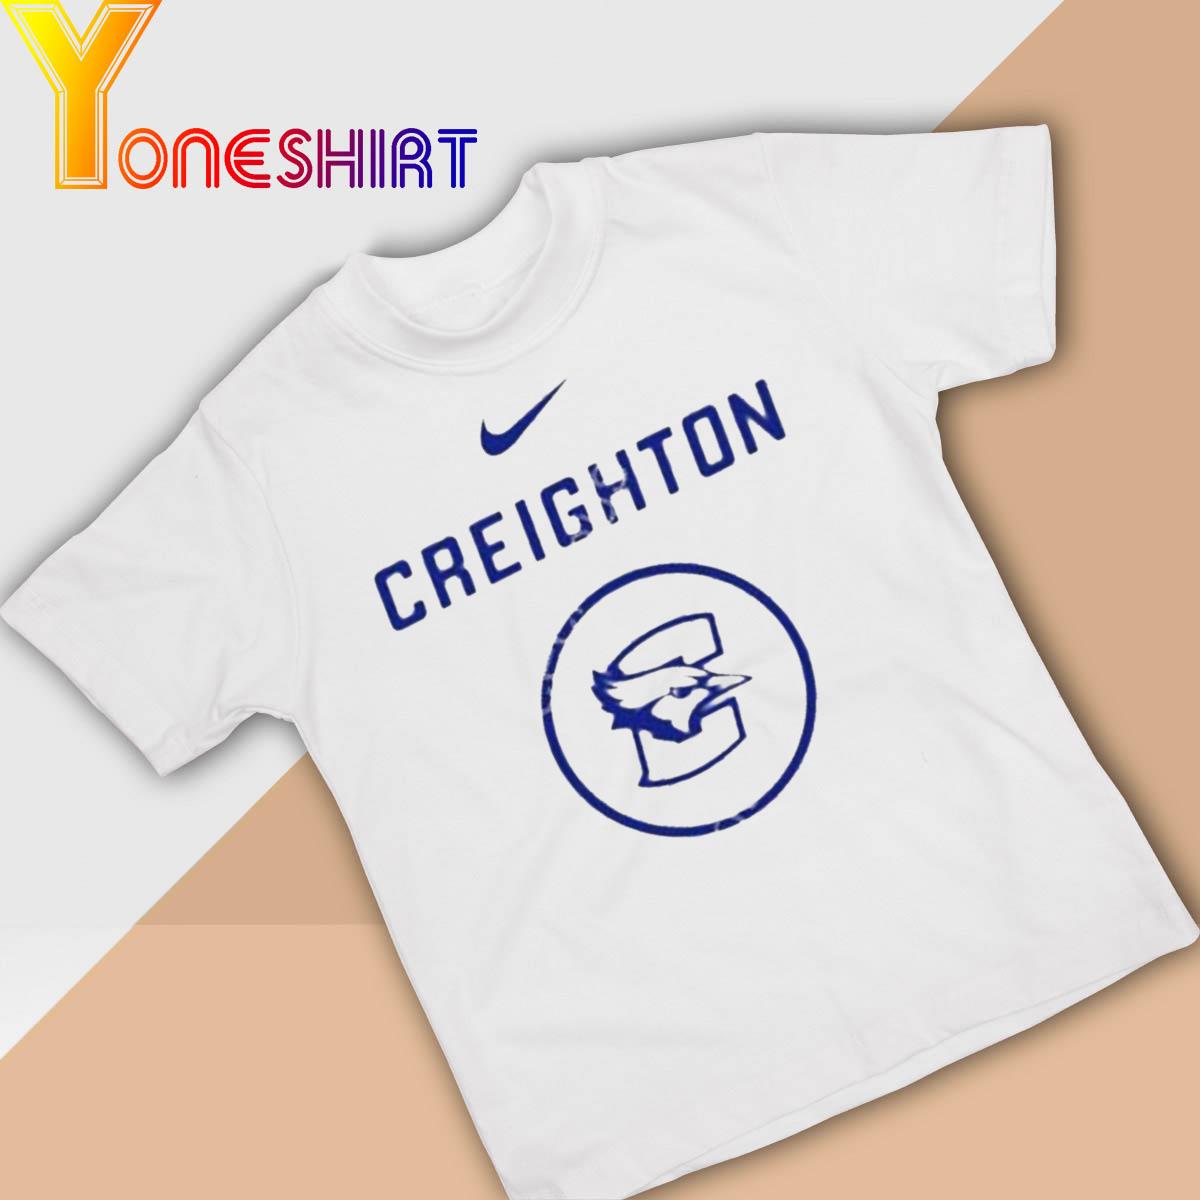 Nike Creighton Men's Basketball shirt